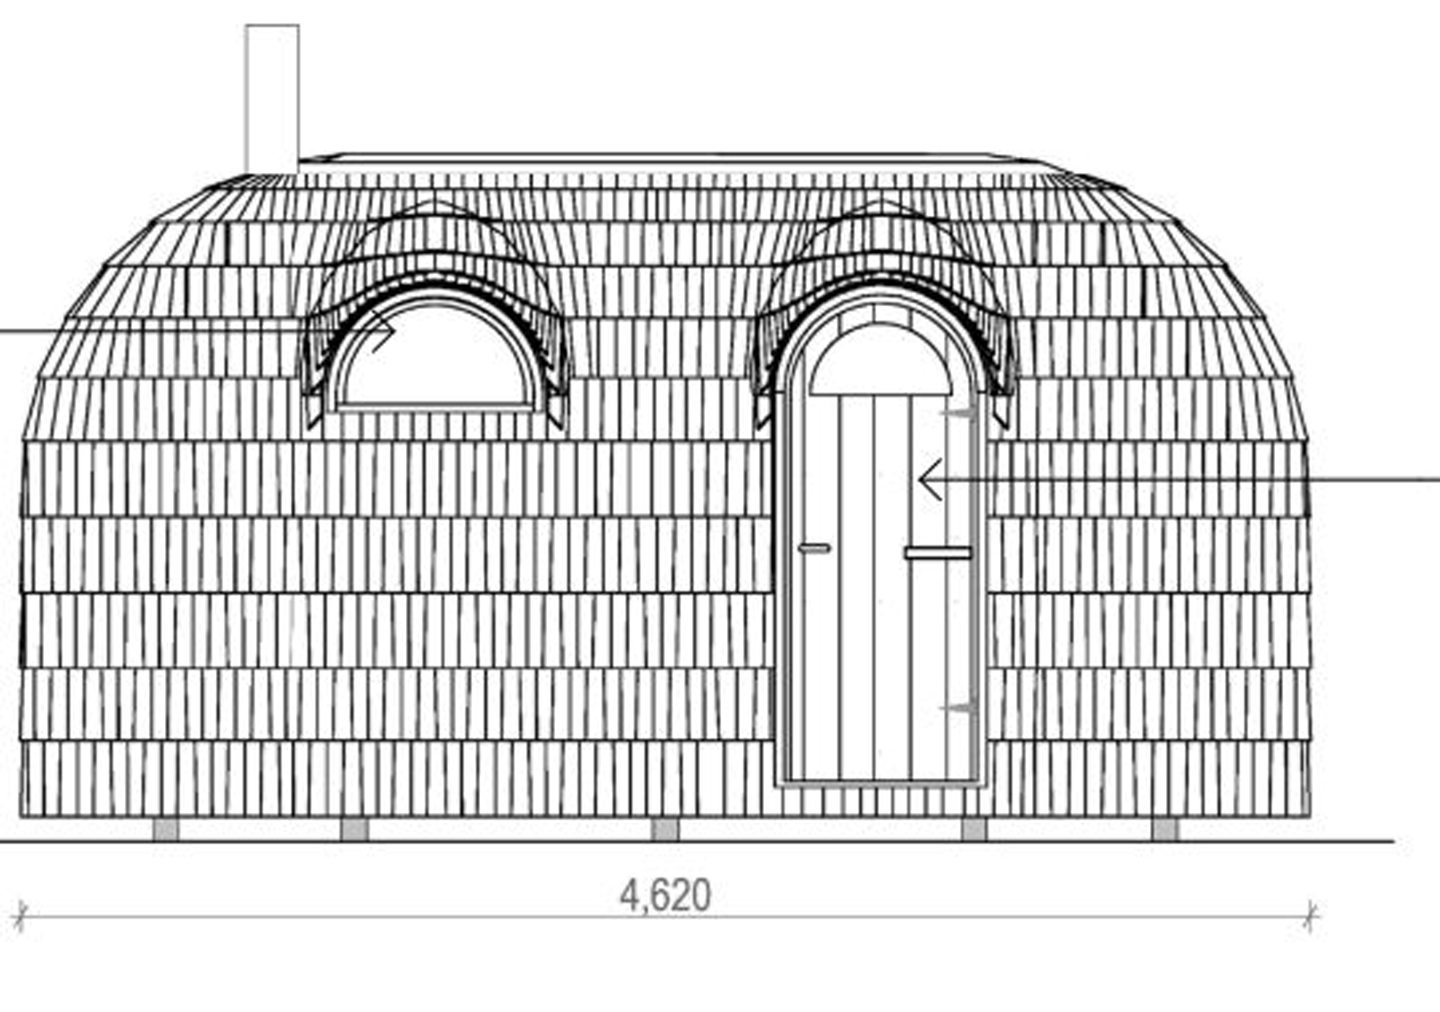 The proposed planning sauna structures for Bracken Hide development